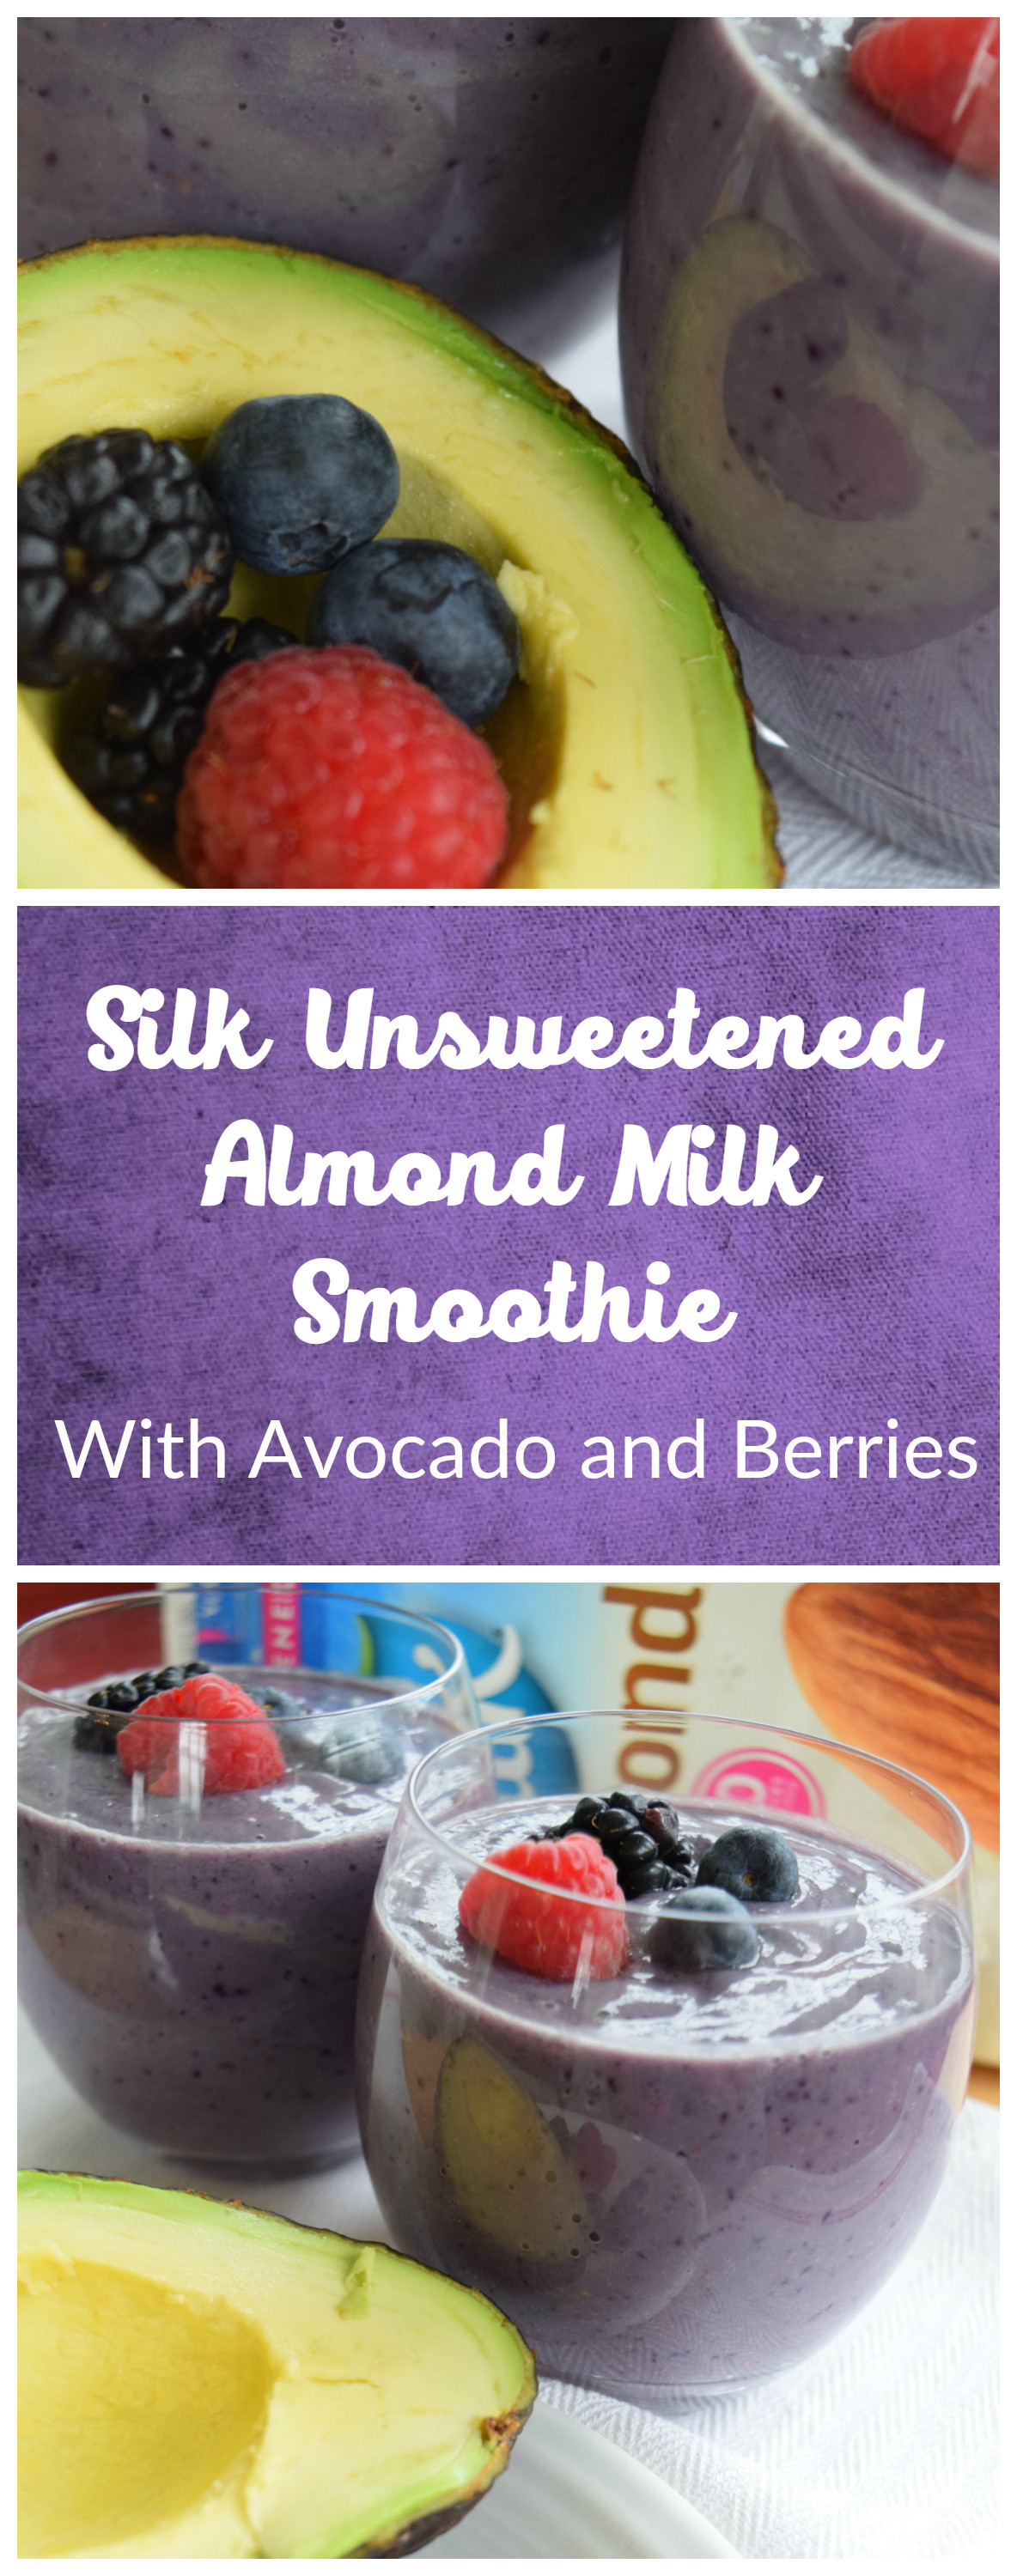 Diabetic Smoothies With Almond Milk
 Silk Dairy Free and Sugar Free Avocado Berry Almond Milk